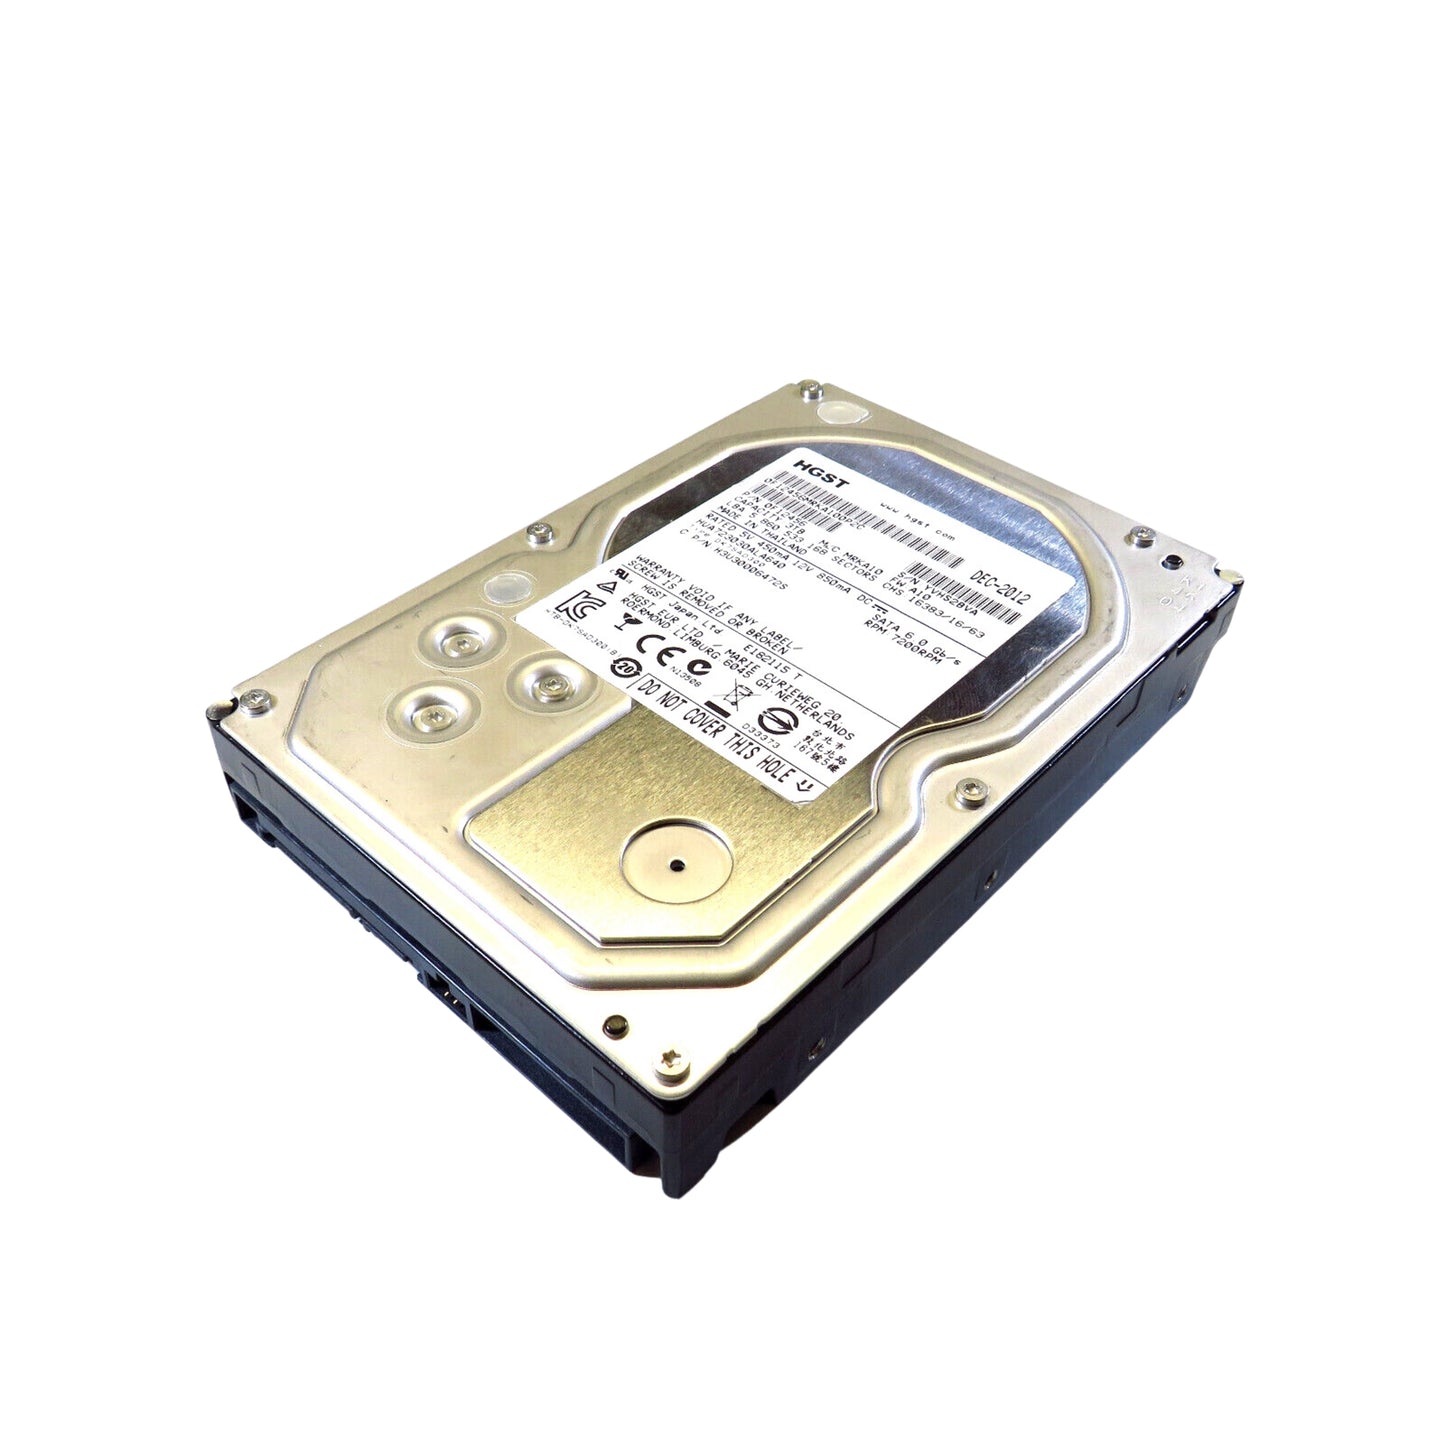 HGST HUA723030ALA640 3.5" 3TB 7200RPM SATA III Hard Disk Drive (HDD), Silver (Refurbished)